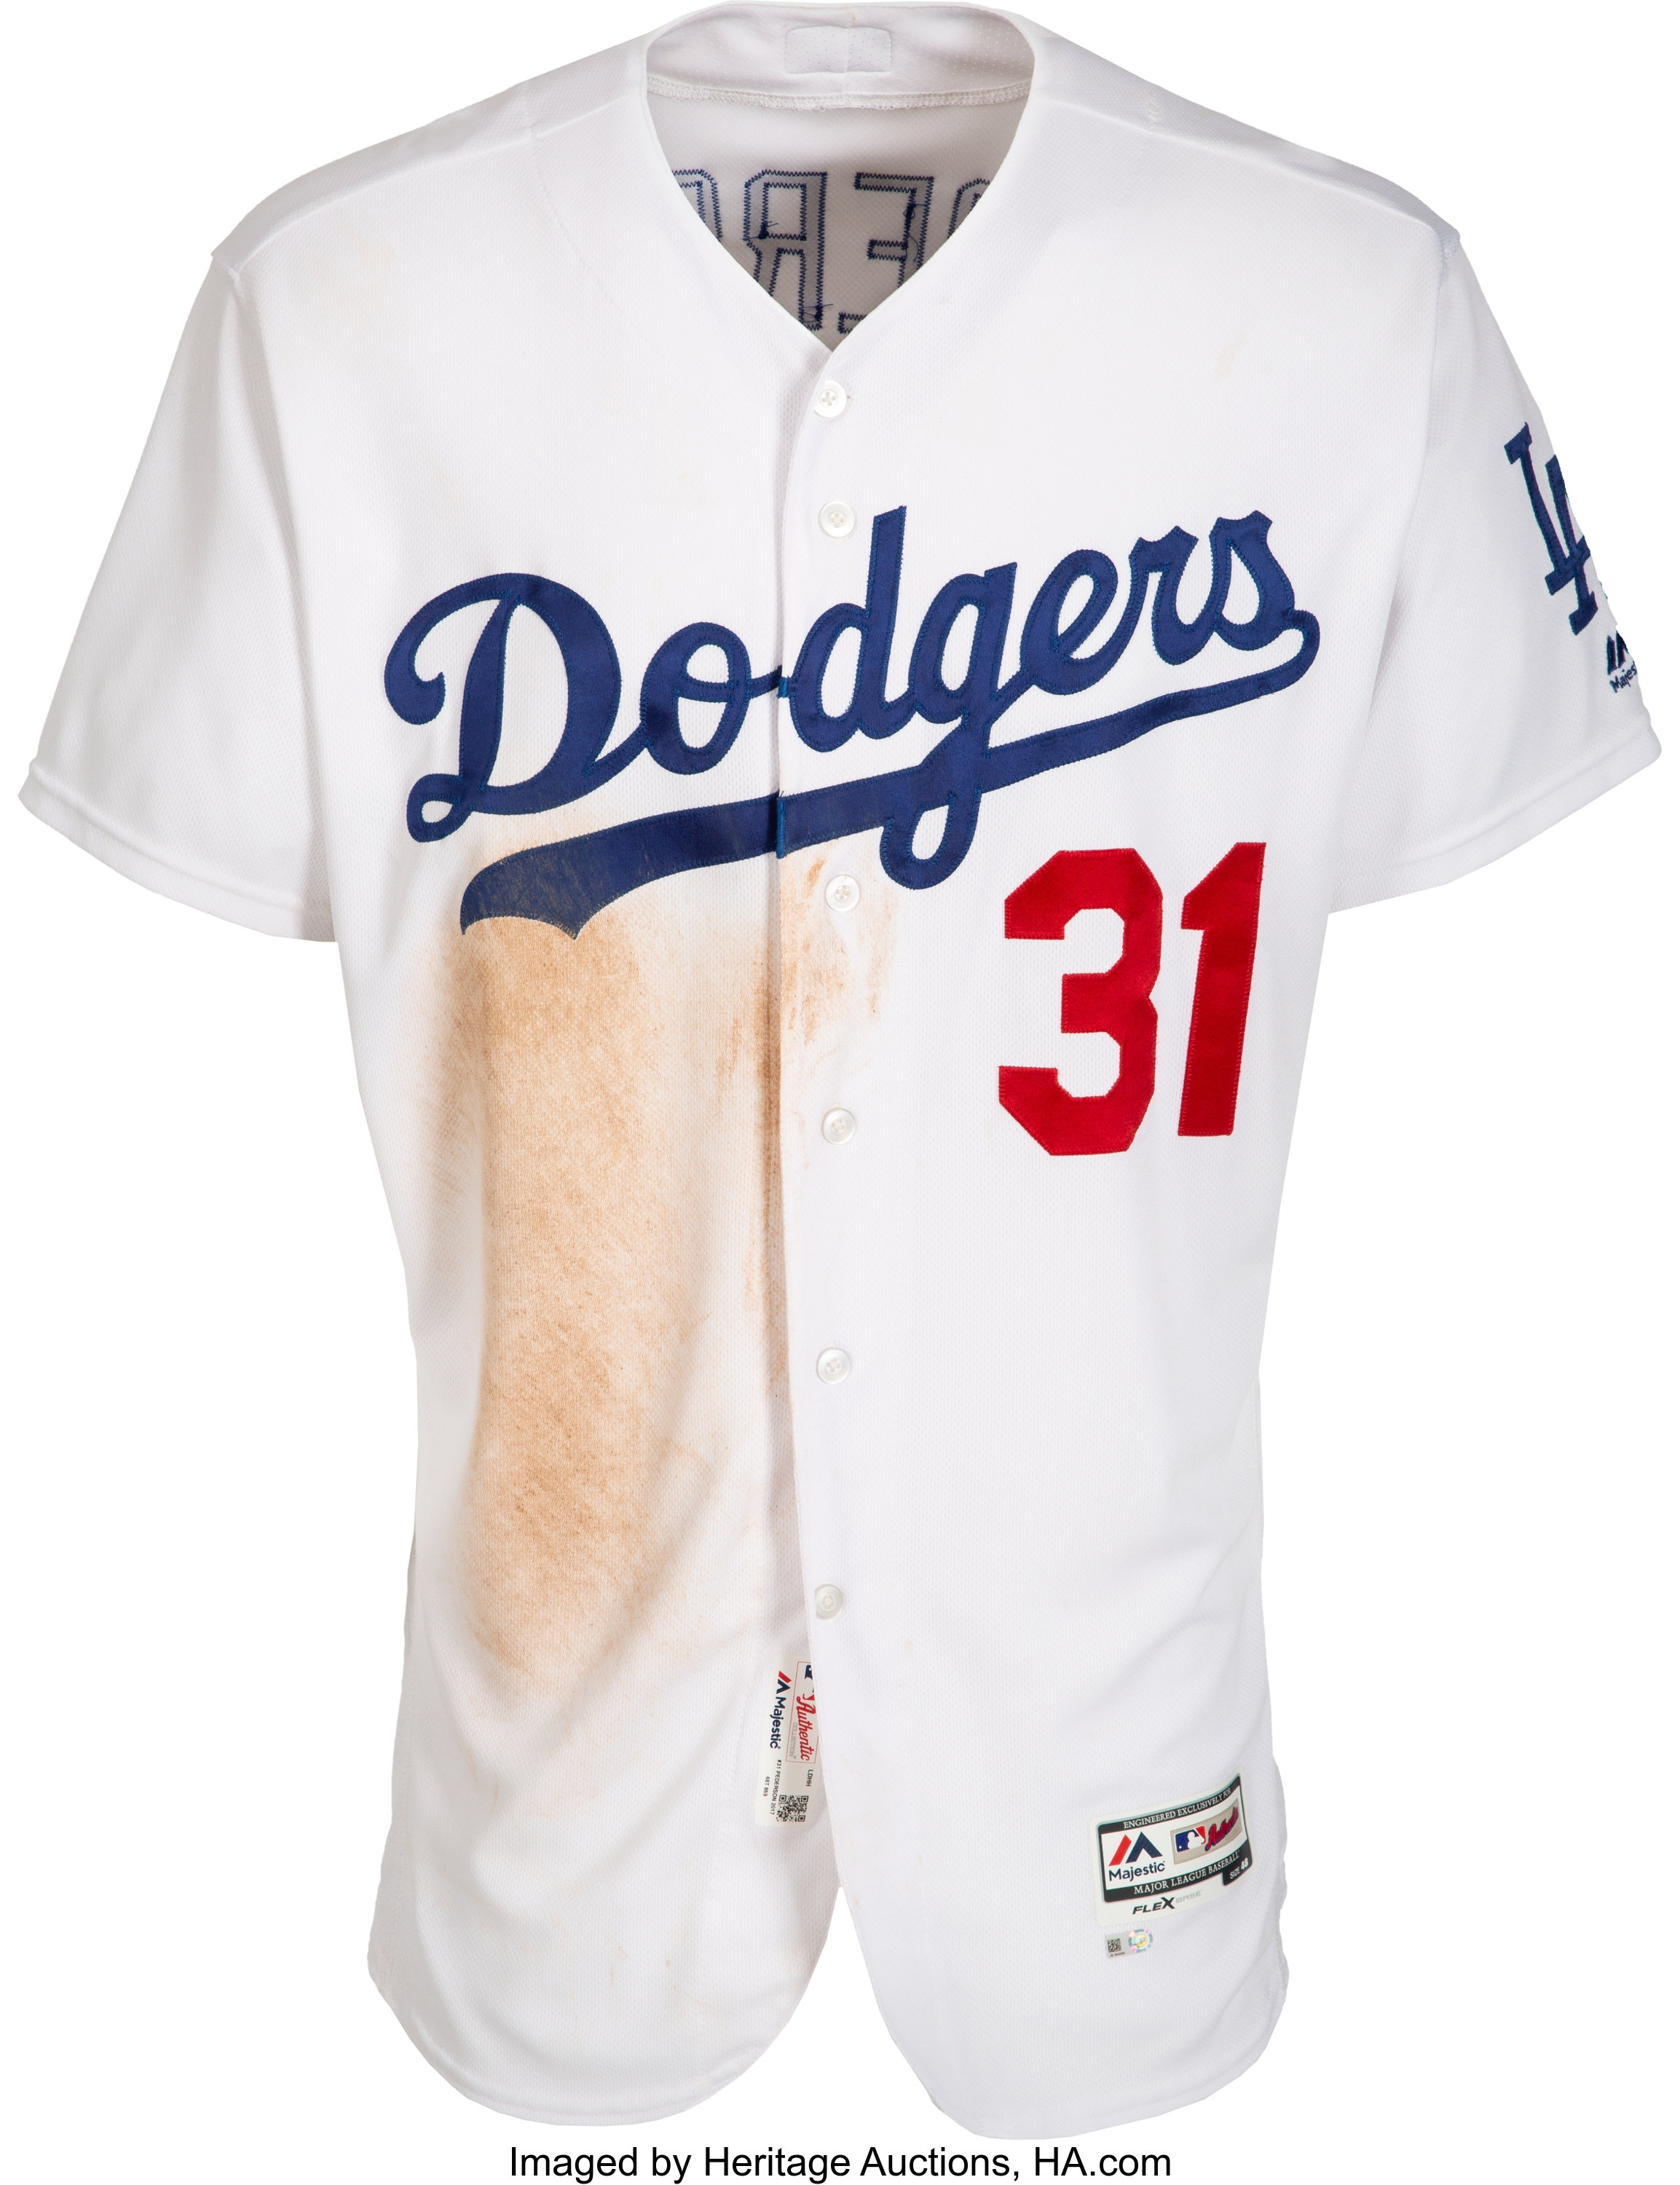 Joc Pederson Signed Los Angeles Dodgers Jersey (JSA COA) 2015 All Star  Outfield